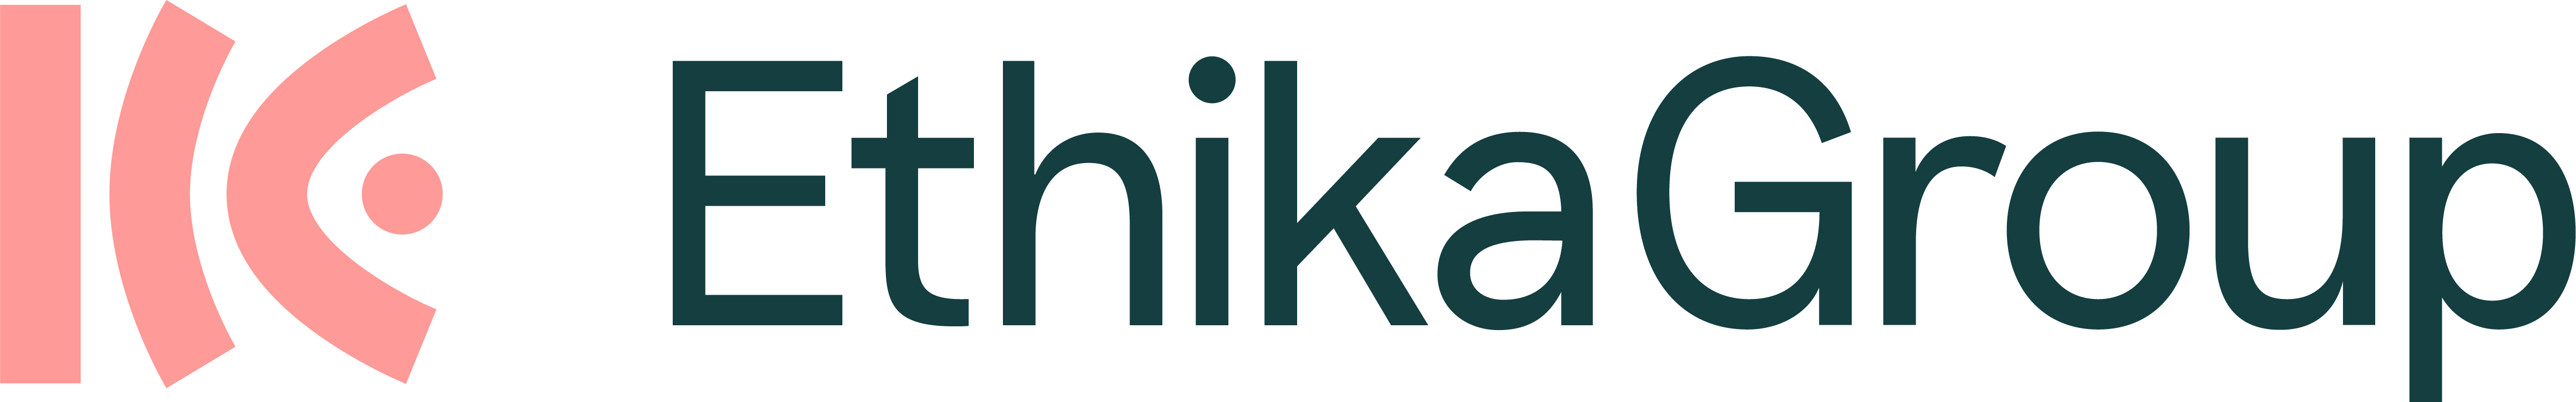 Ethika Logo Pink and Green